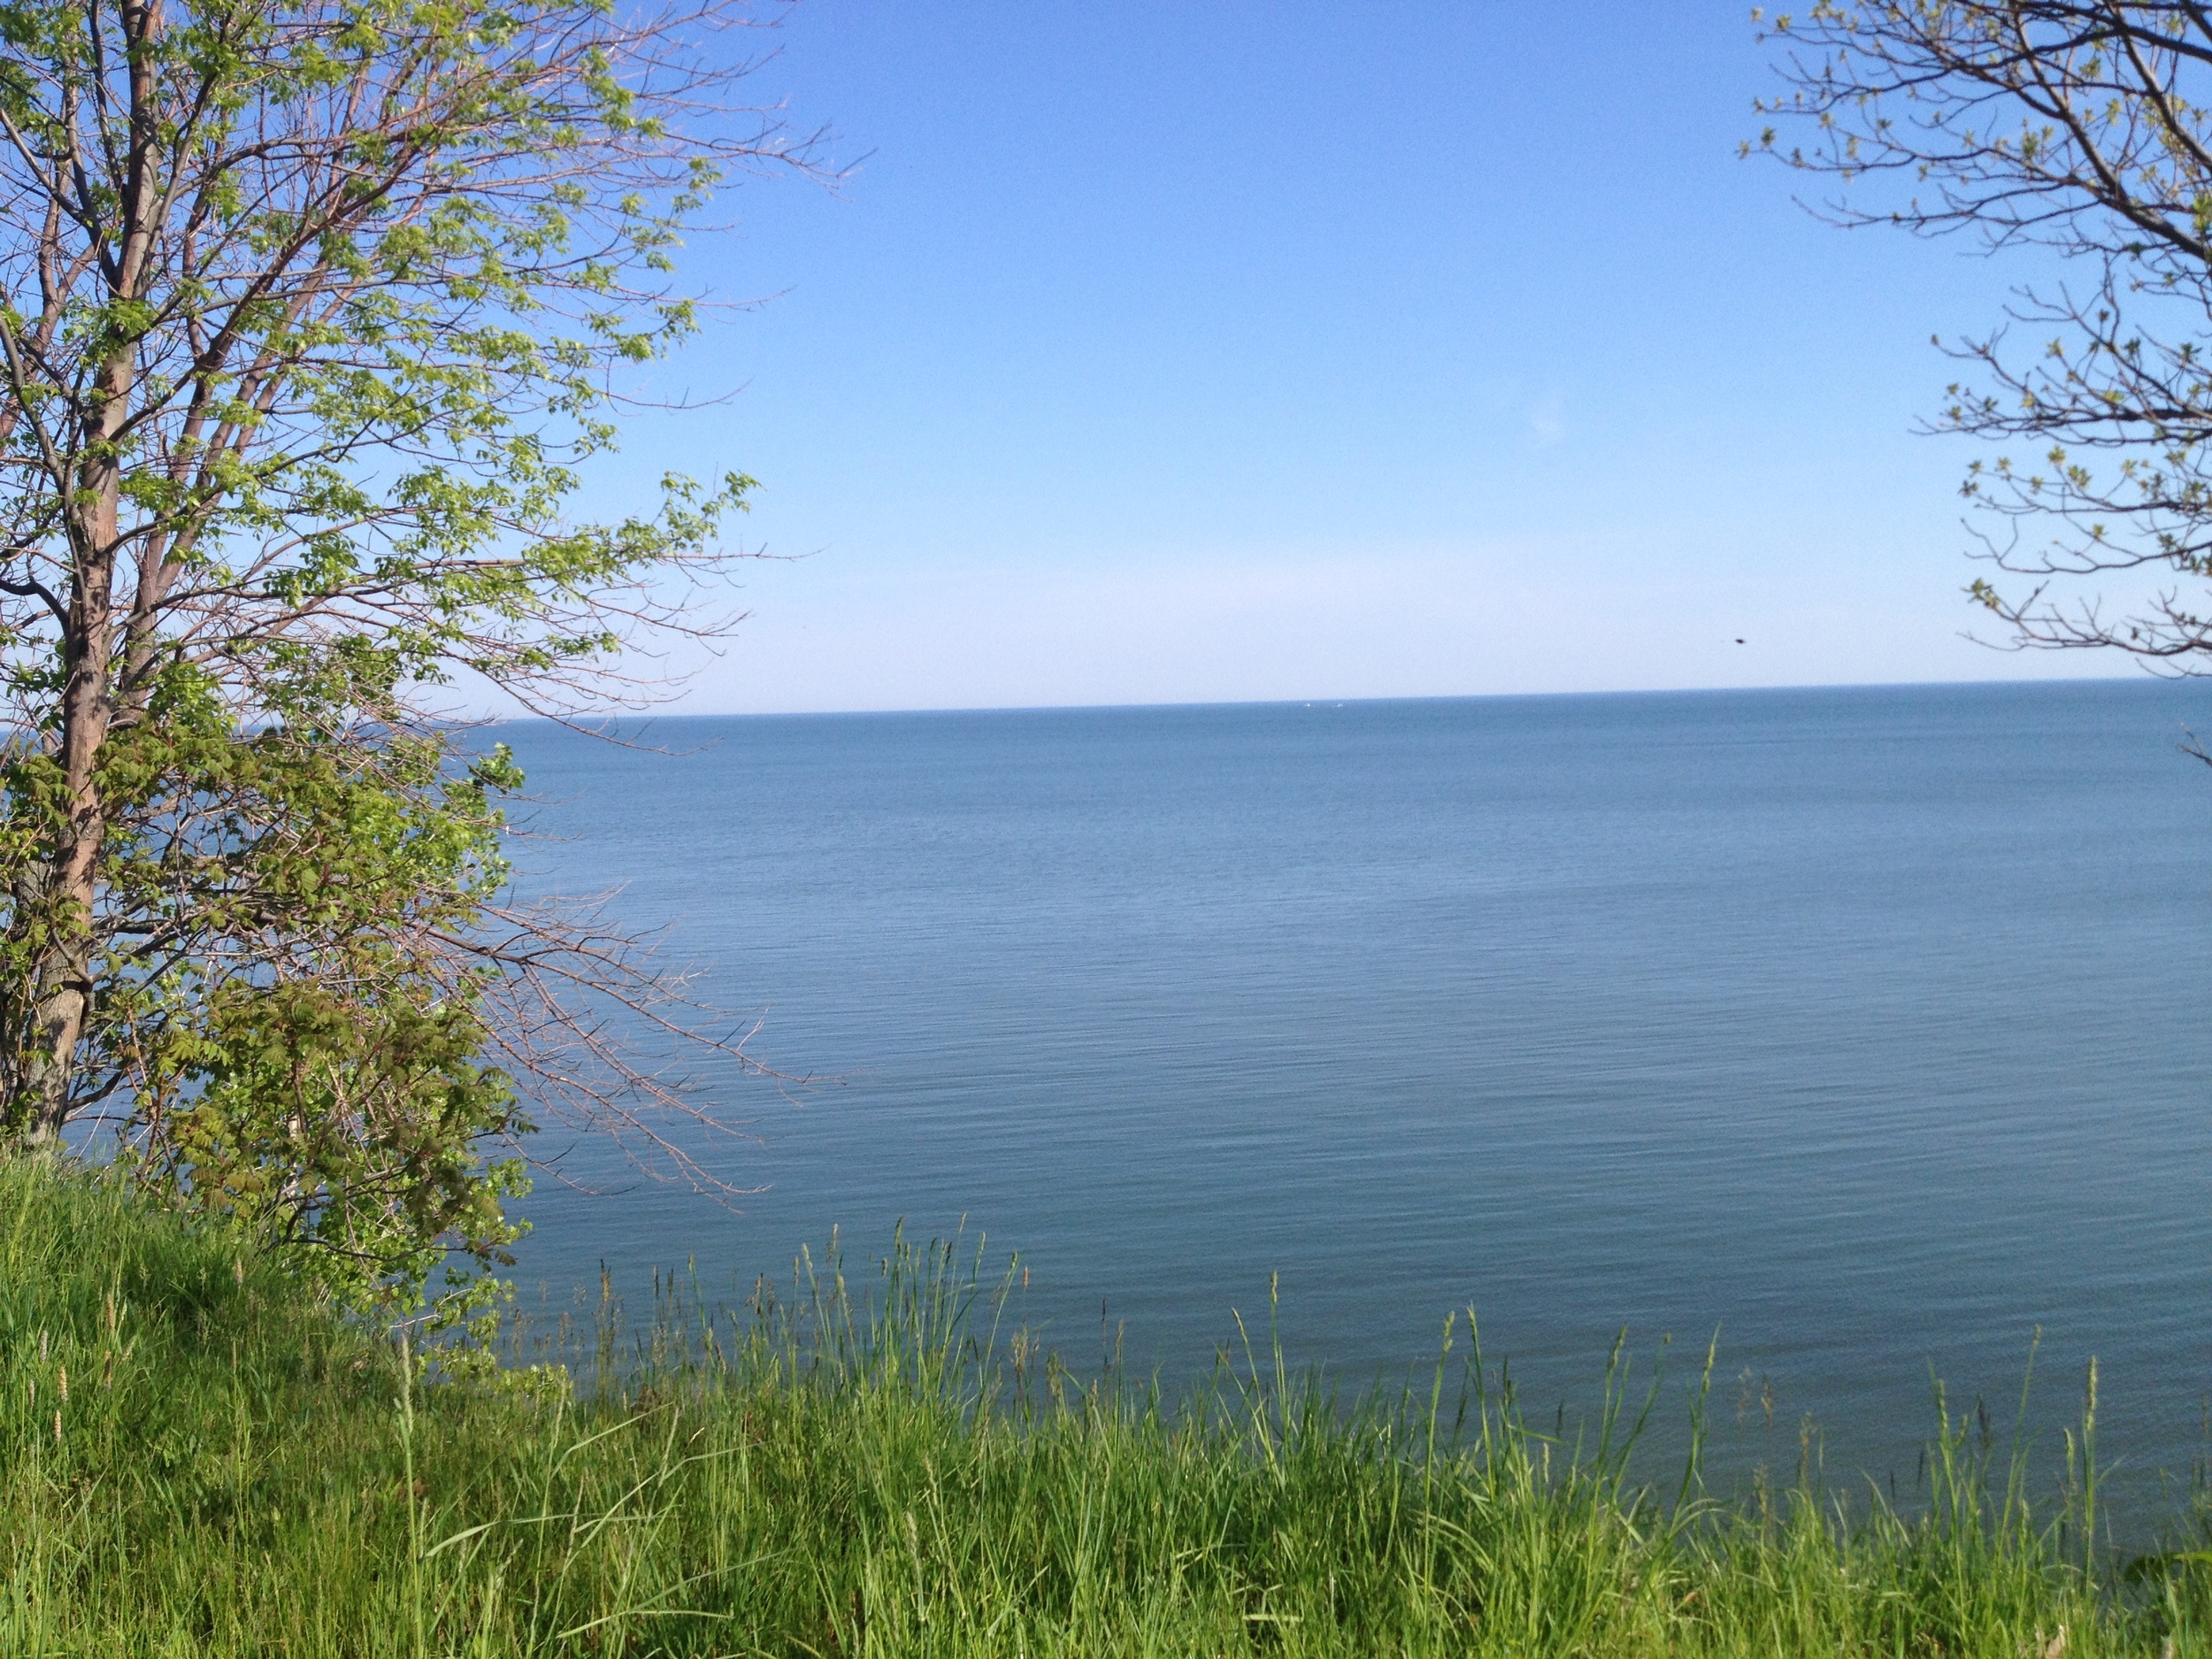   Lake Erie, Ohio  